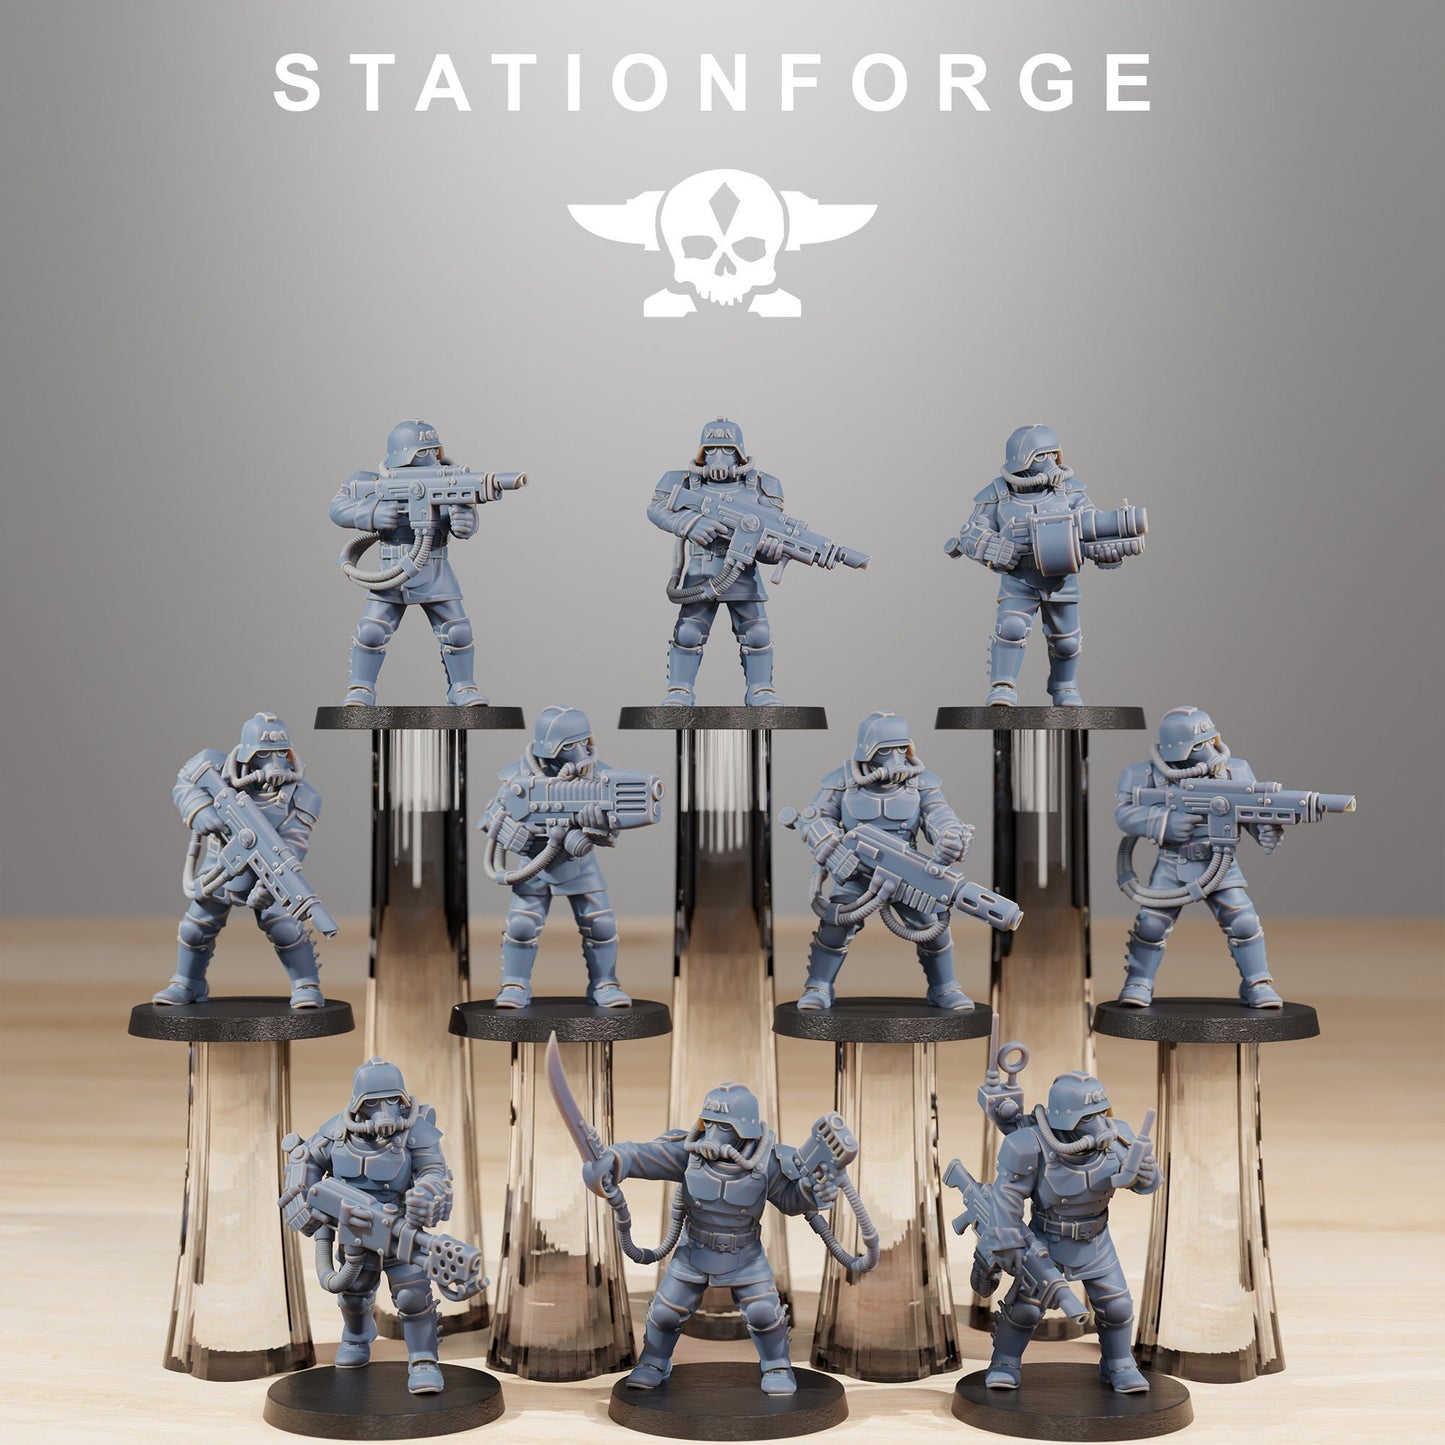 Grim Commandos - set of 10 (sculpted by Stationforge)